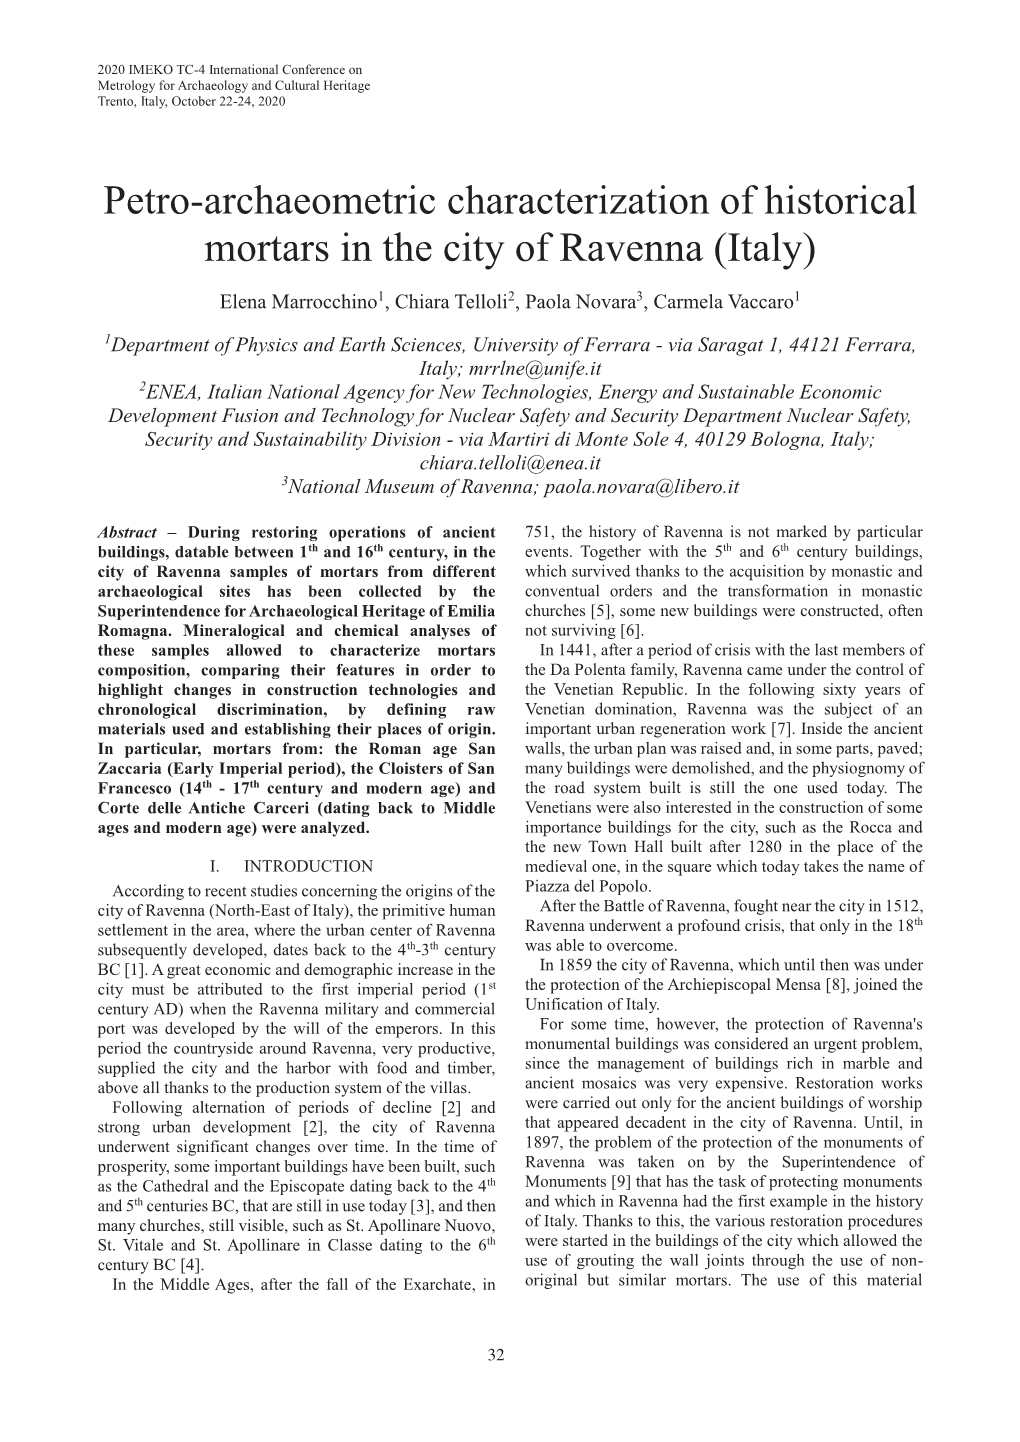 Petro-Archaeometric Characterization of Historical Mortars in the City of Ravenna (Italy)